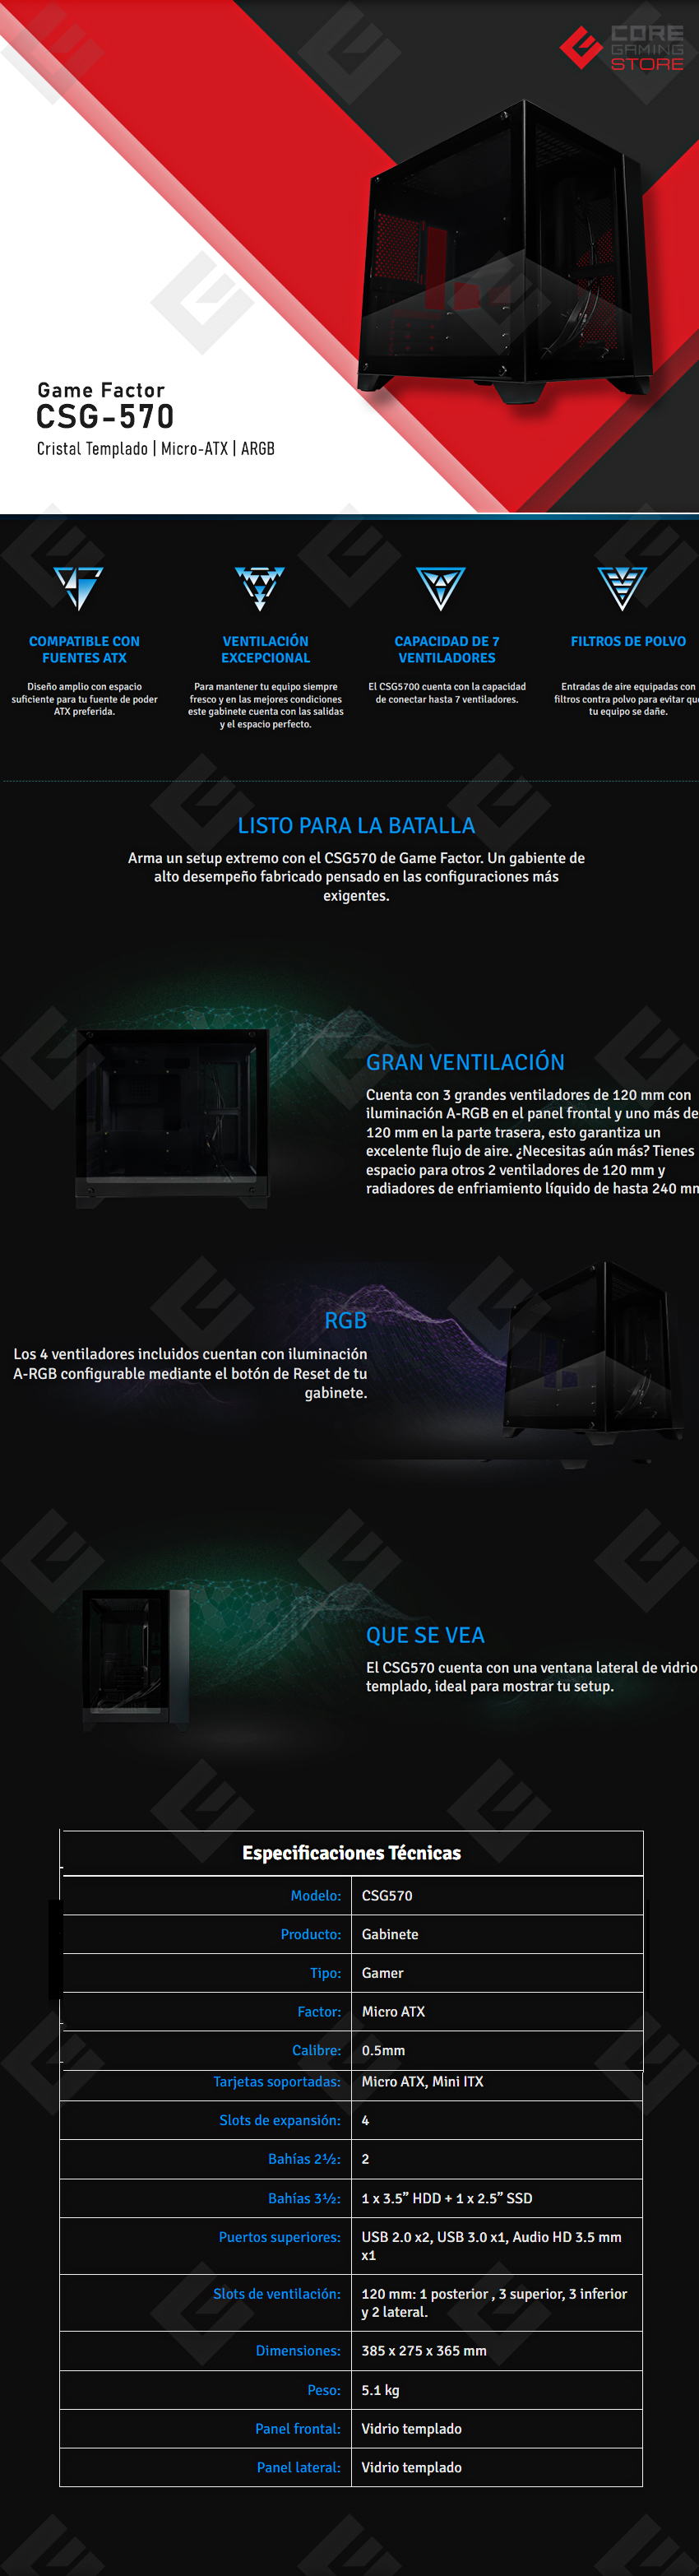 Gabinete GameFactor CSG-570, Micro-ATX , RGB, Cristal Templado, - CSG-570